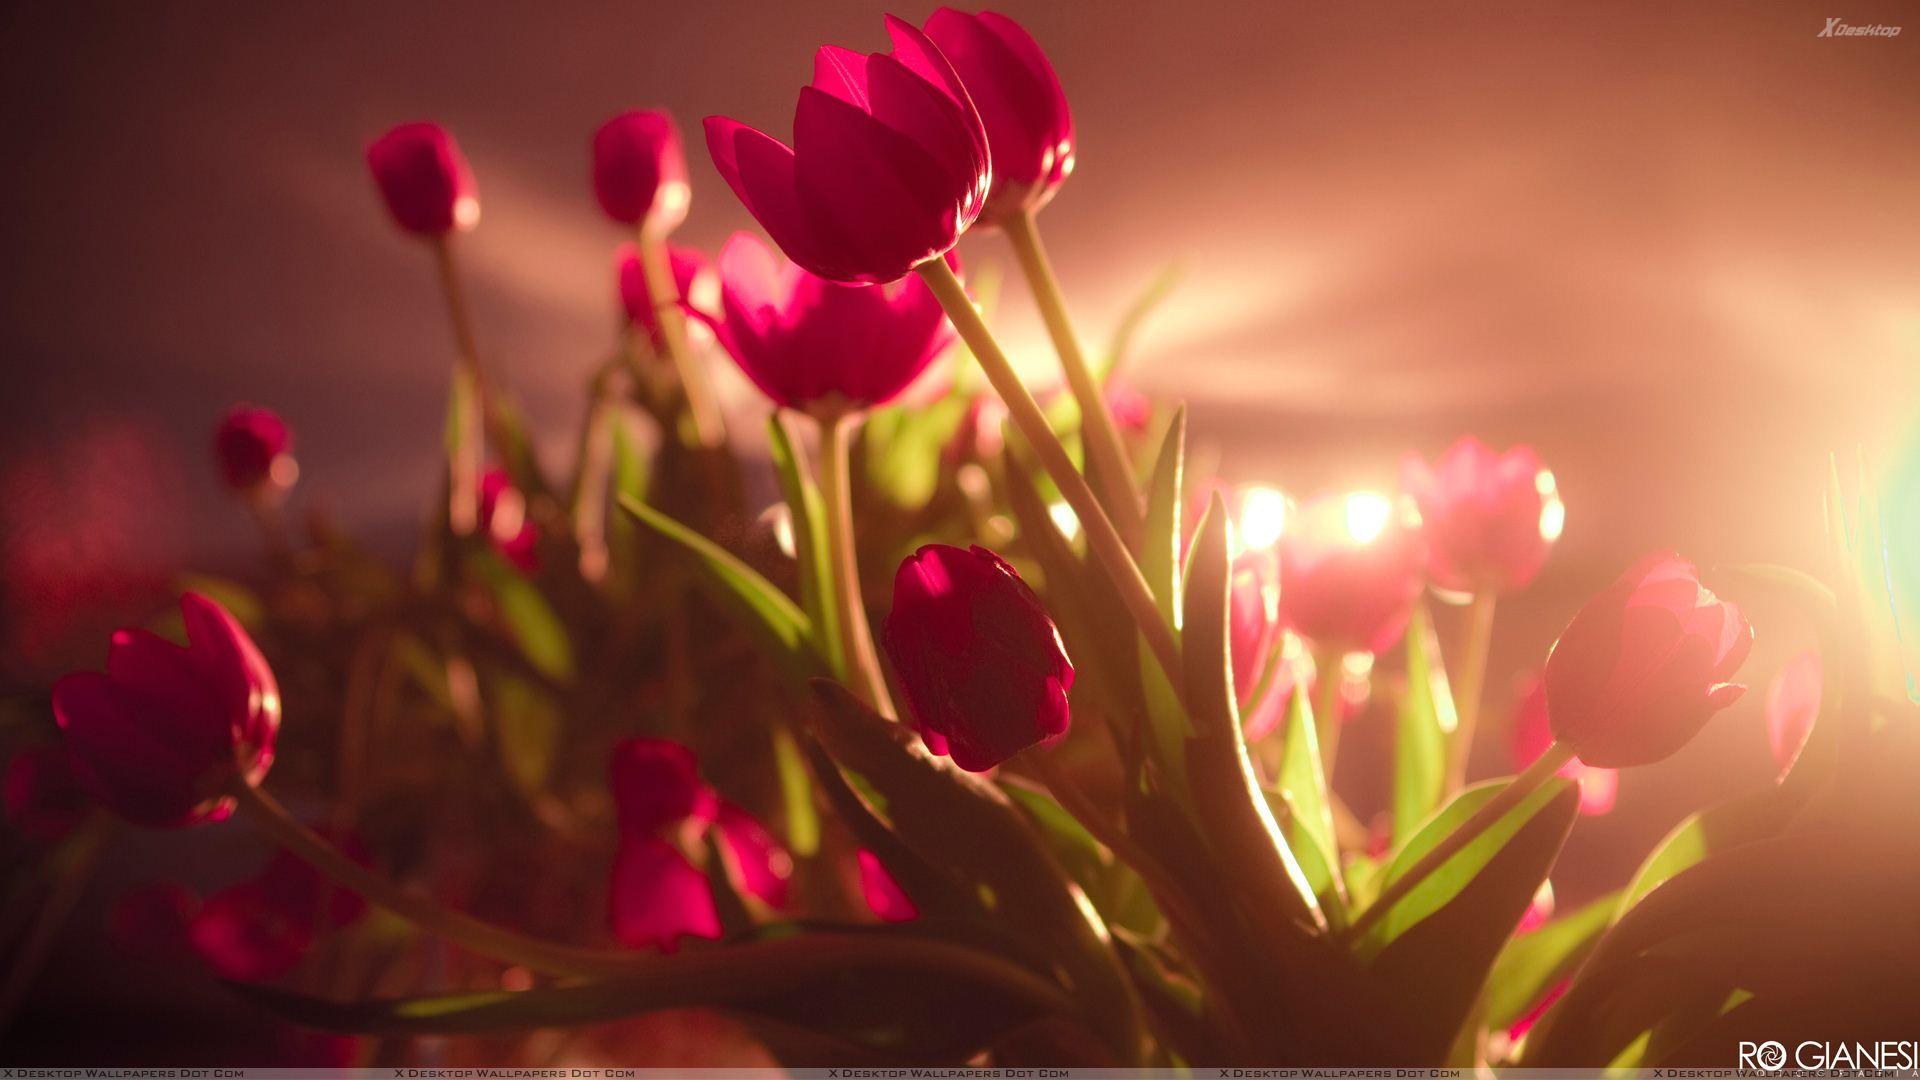 Vibrant Red Tulips In SunLight Wallpaper